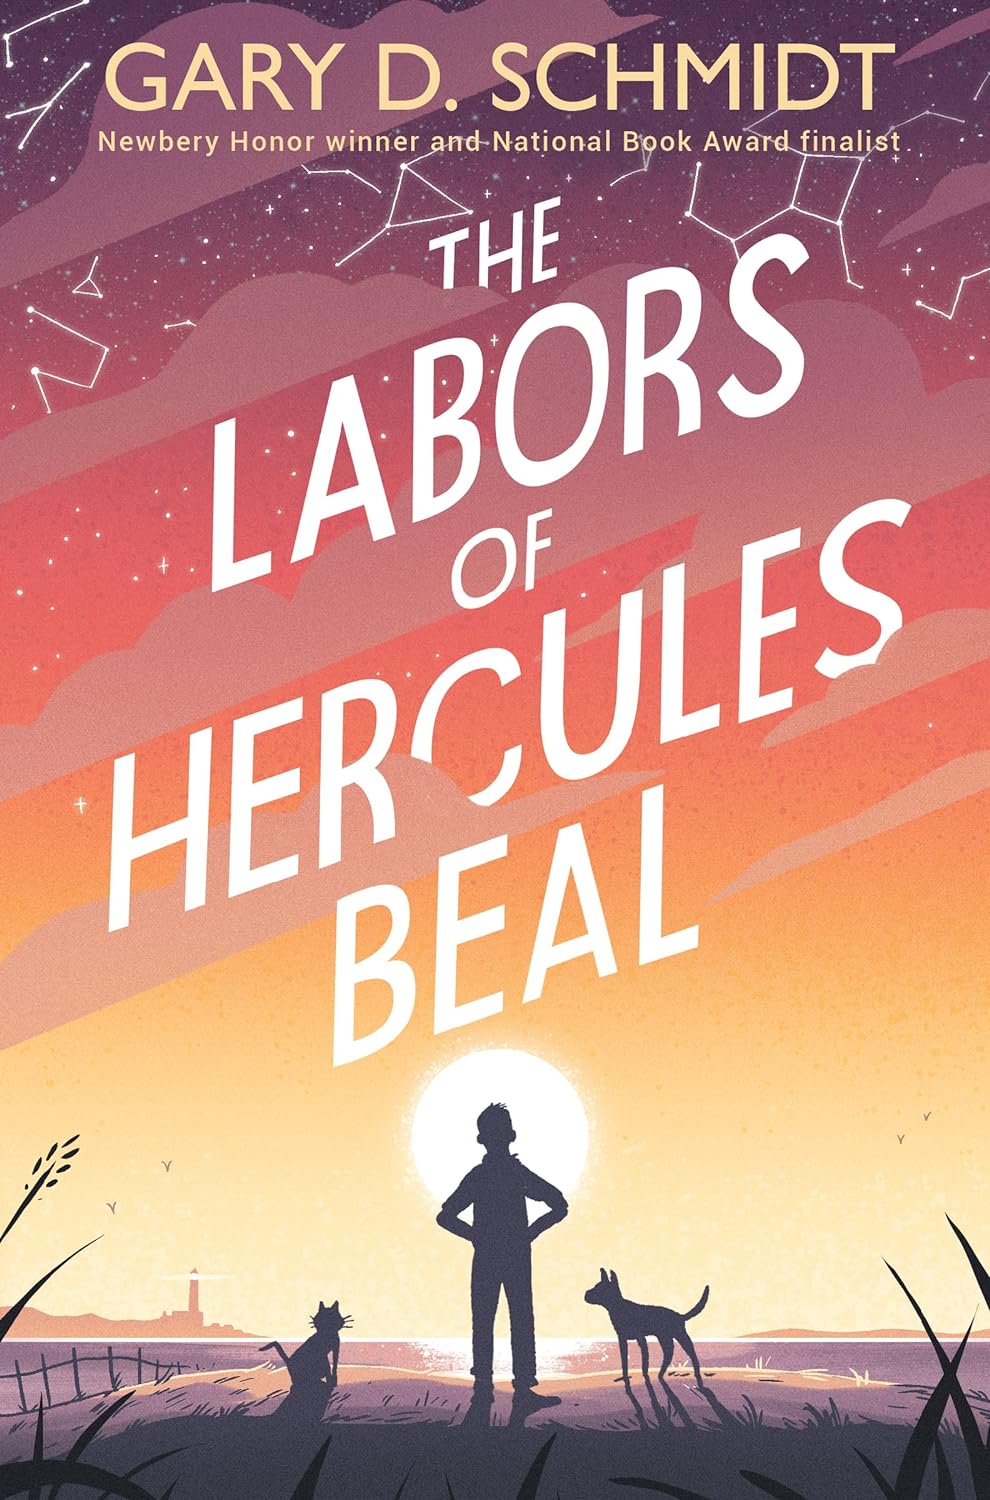 the-labors-of-hercules-beal